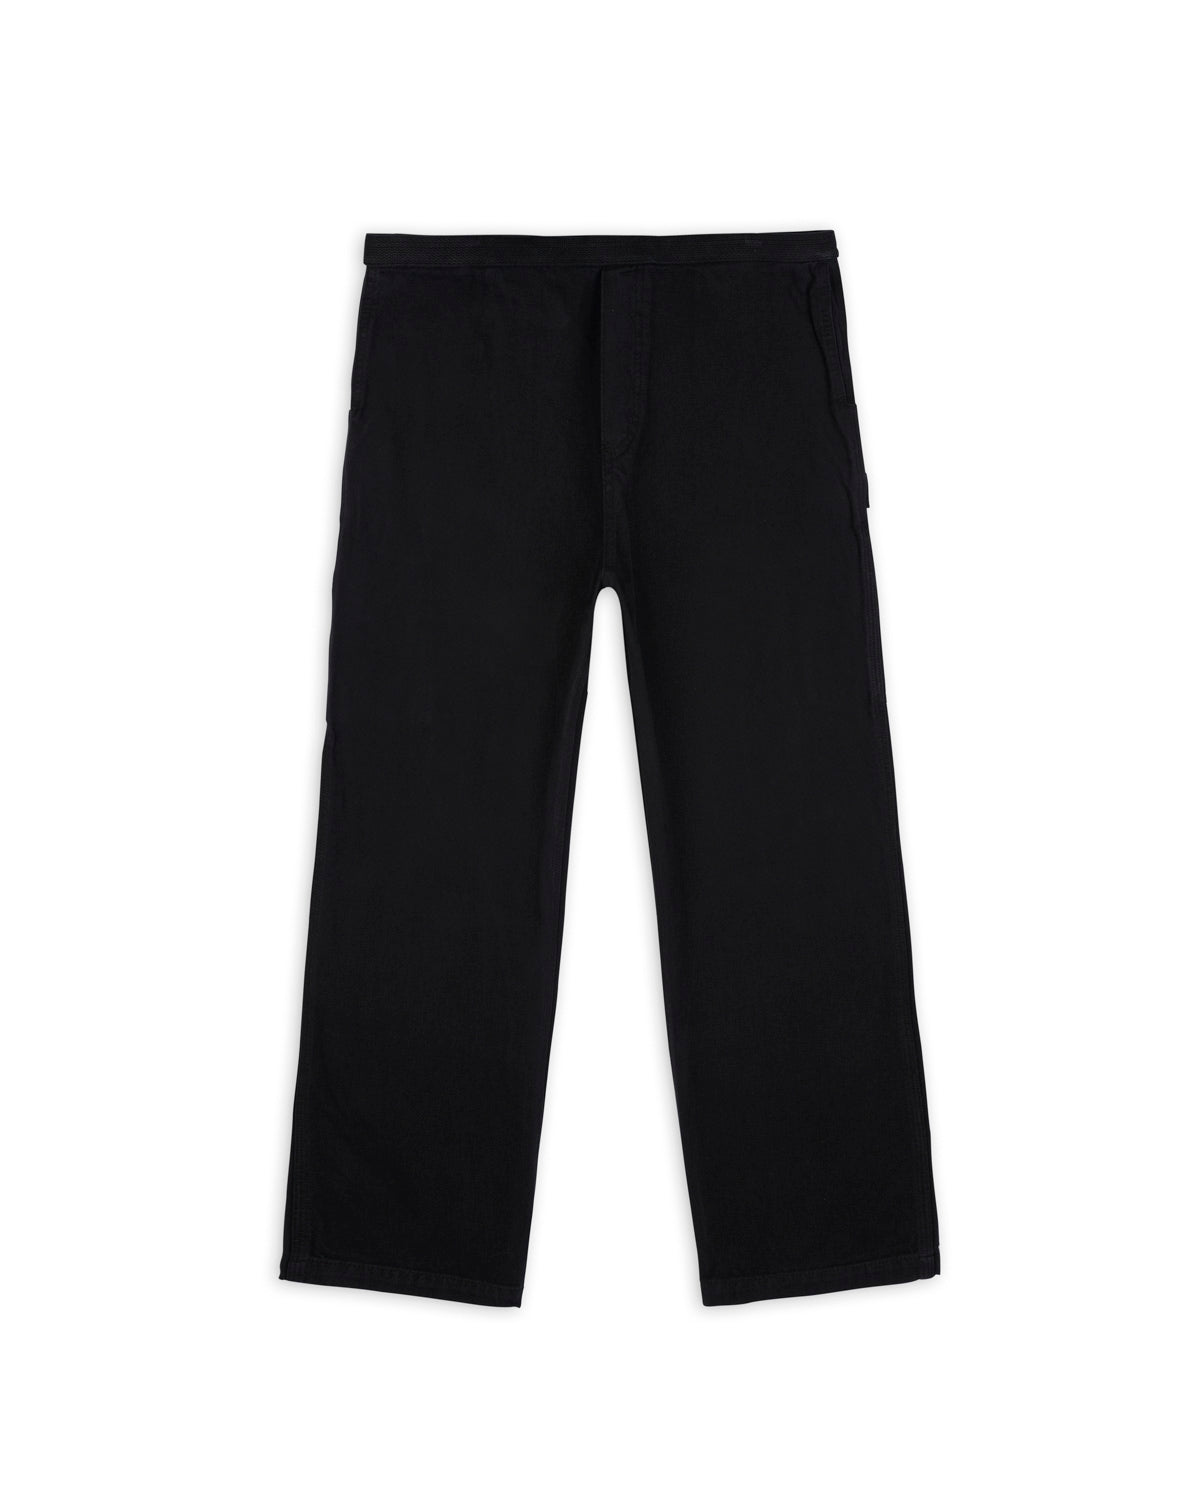 Washed Hard Ware/ Soft Wear Carpenter Pant - Pigment Black 1